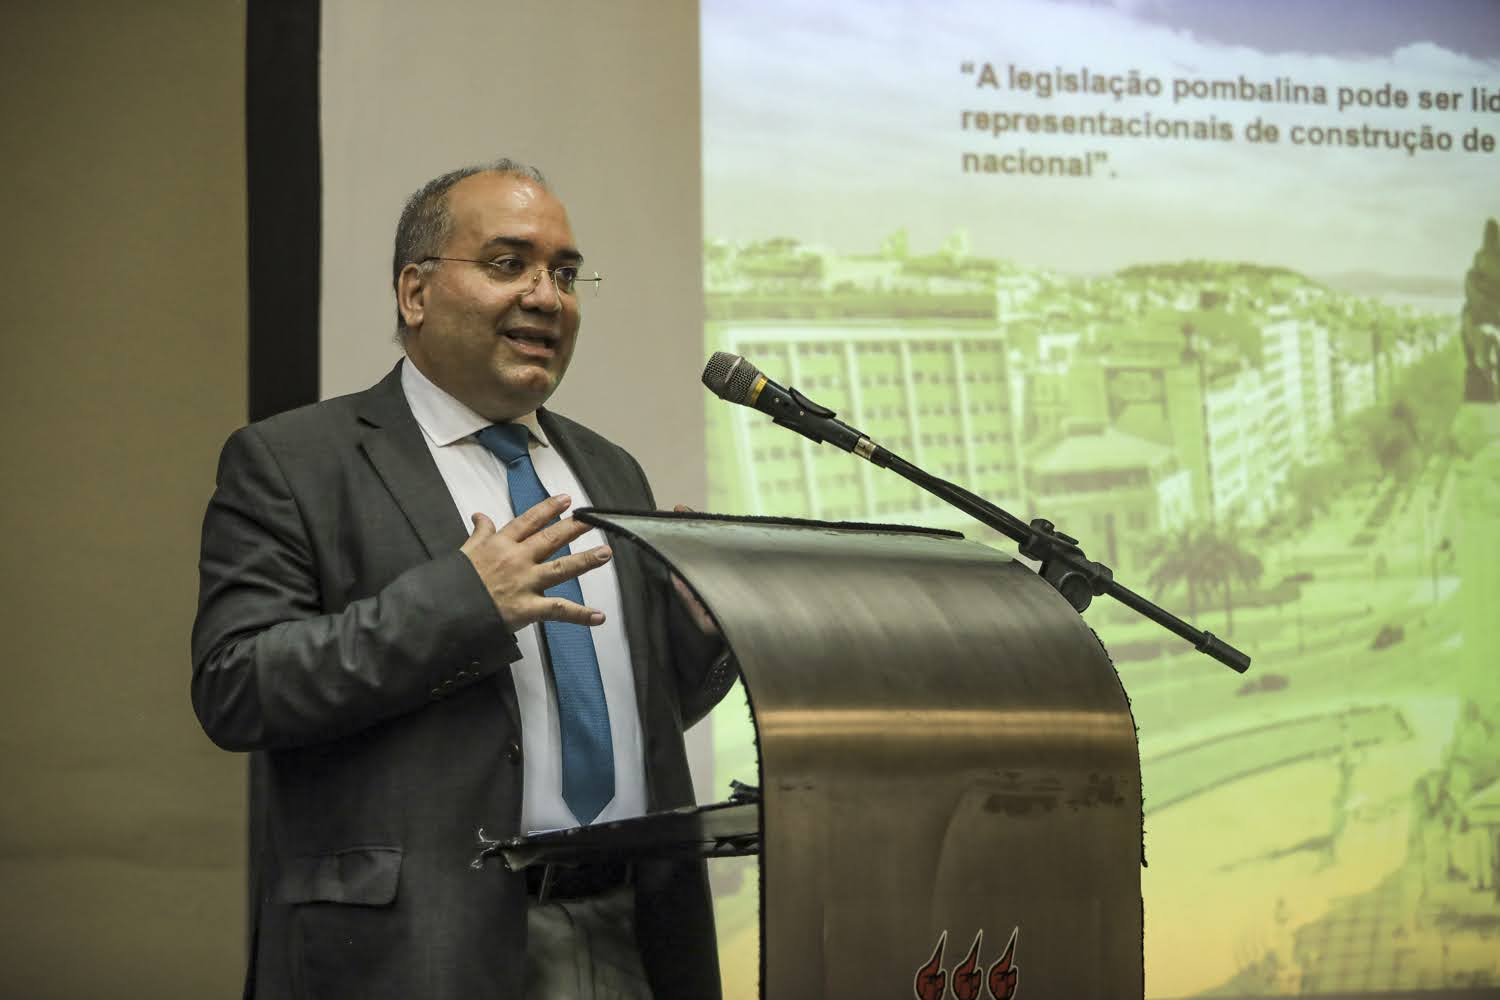 Professor José Eduardo Franco proferiu a conferência de abertura do I Simpósio Pombalino Internacional